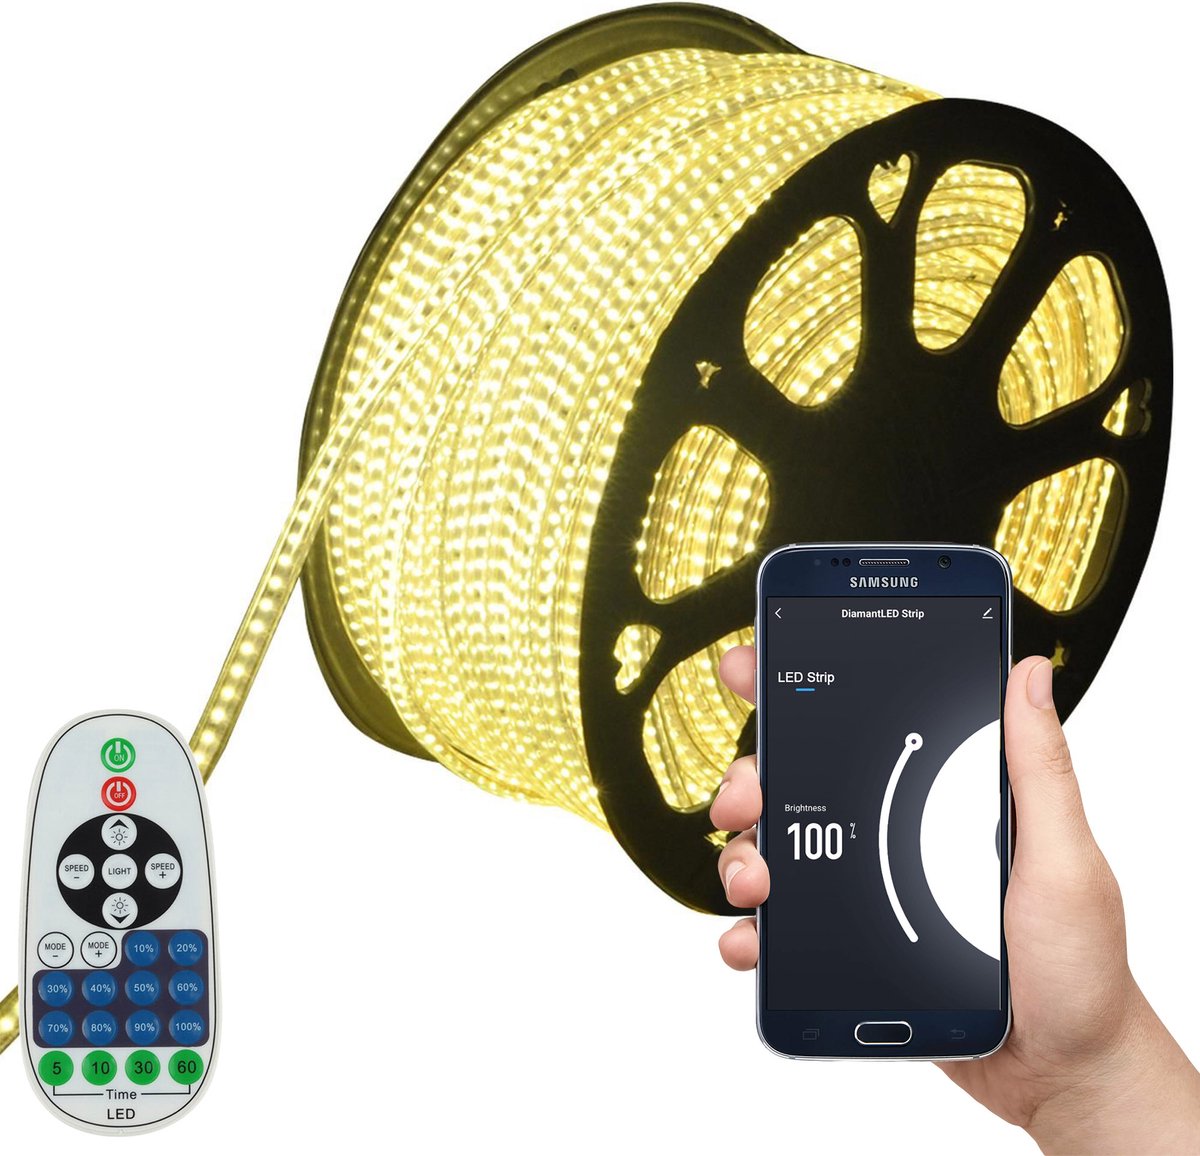 LED Strip Warm Wit - 30 Meter aan één stuk - 180 LED's per meter - Met Wi-Fi App + IR 23 knops afstandsbediening - Smarthome - Google Home/Amazon Alexa - Waterdicht - Makkelijke mobiele App voor bedienen inclusief afstandsbediening - iOS en Android